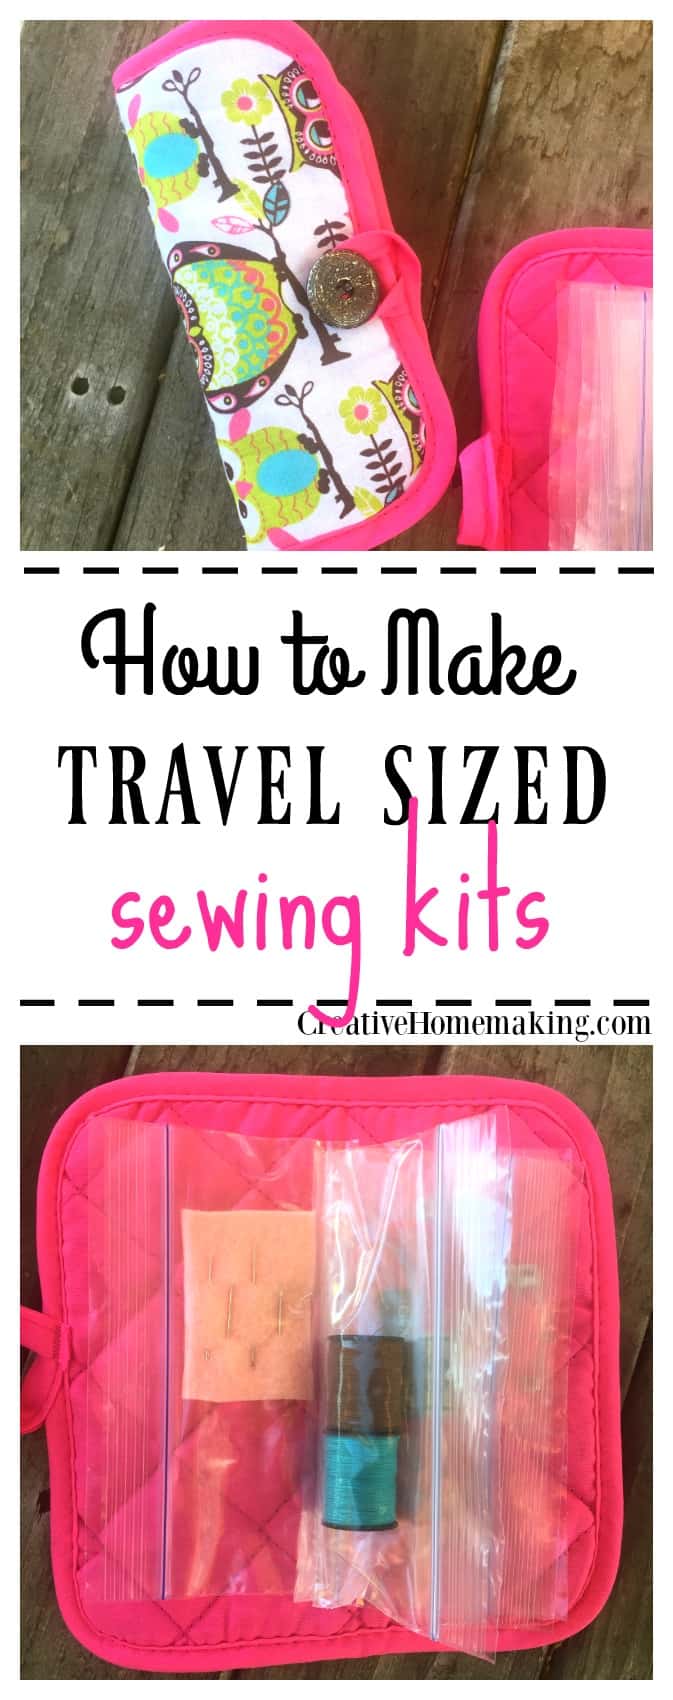 DIY Travel Sized Sewing Kit - Creative Homemaking